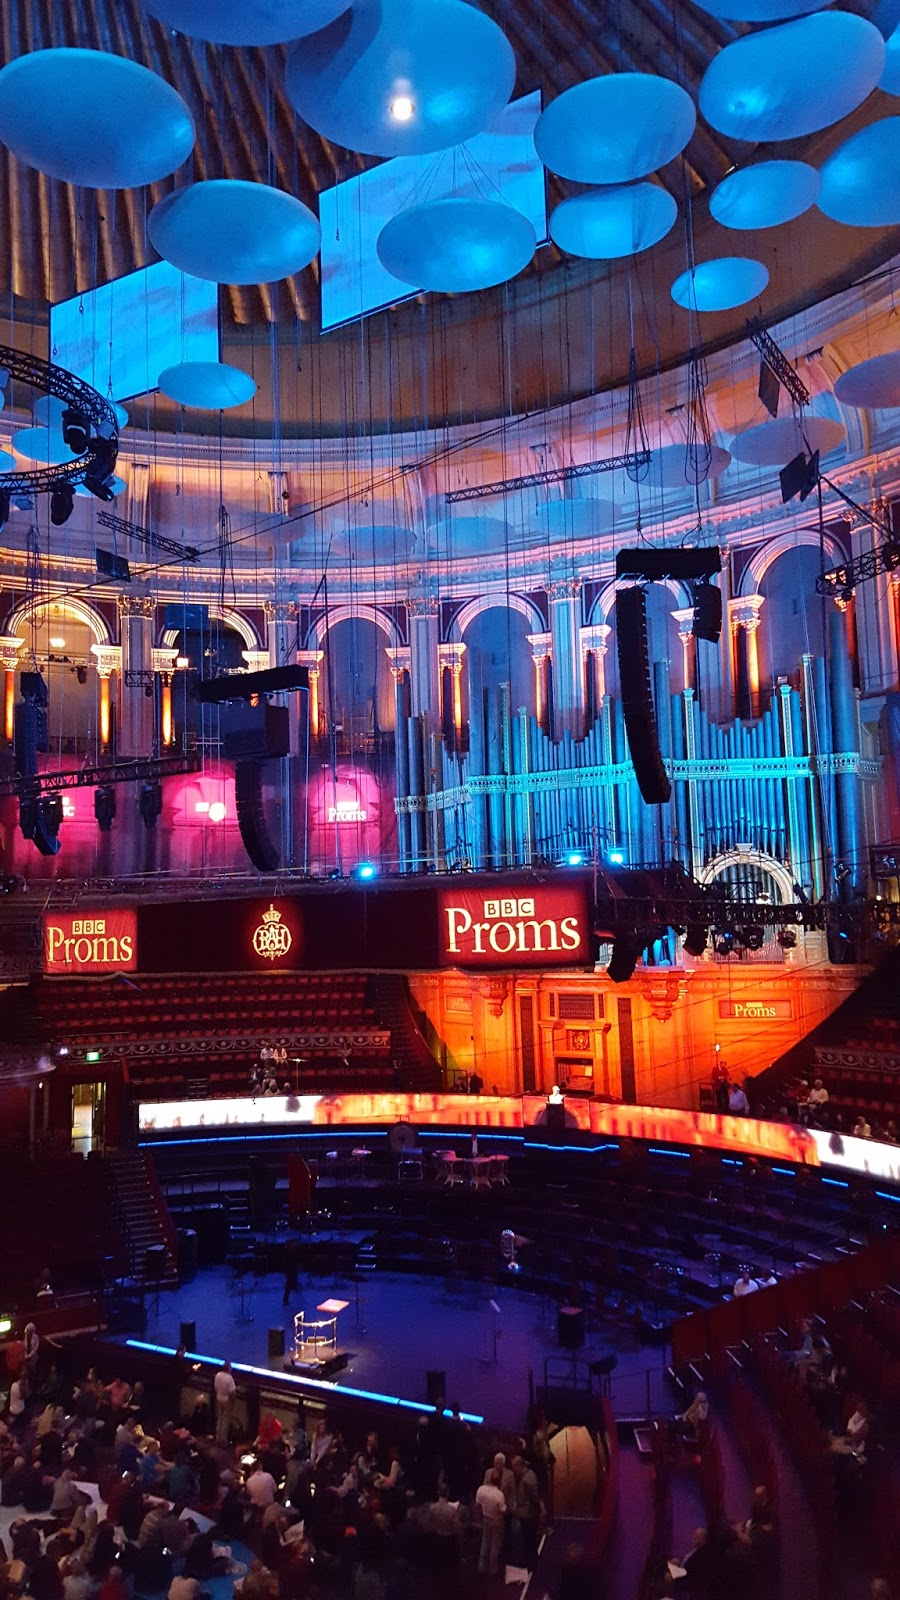 BBC Proms is a Rock Concerto!